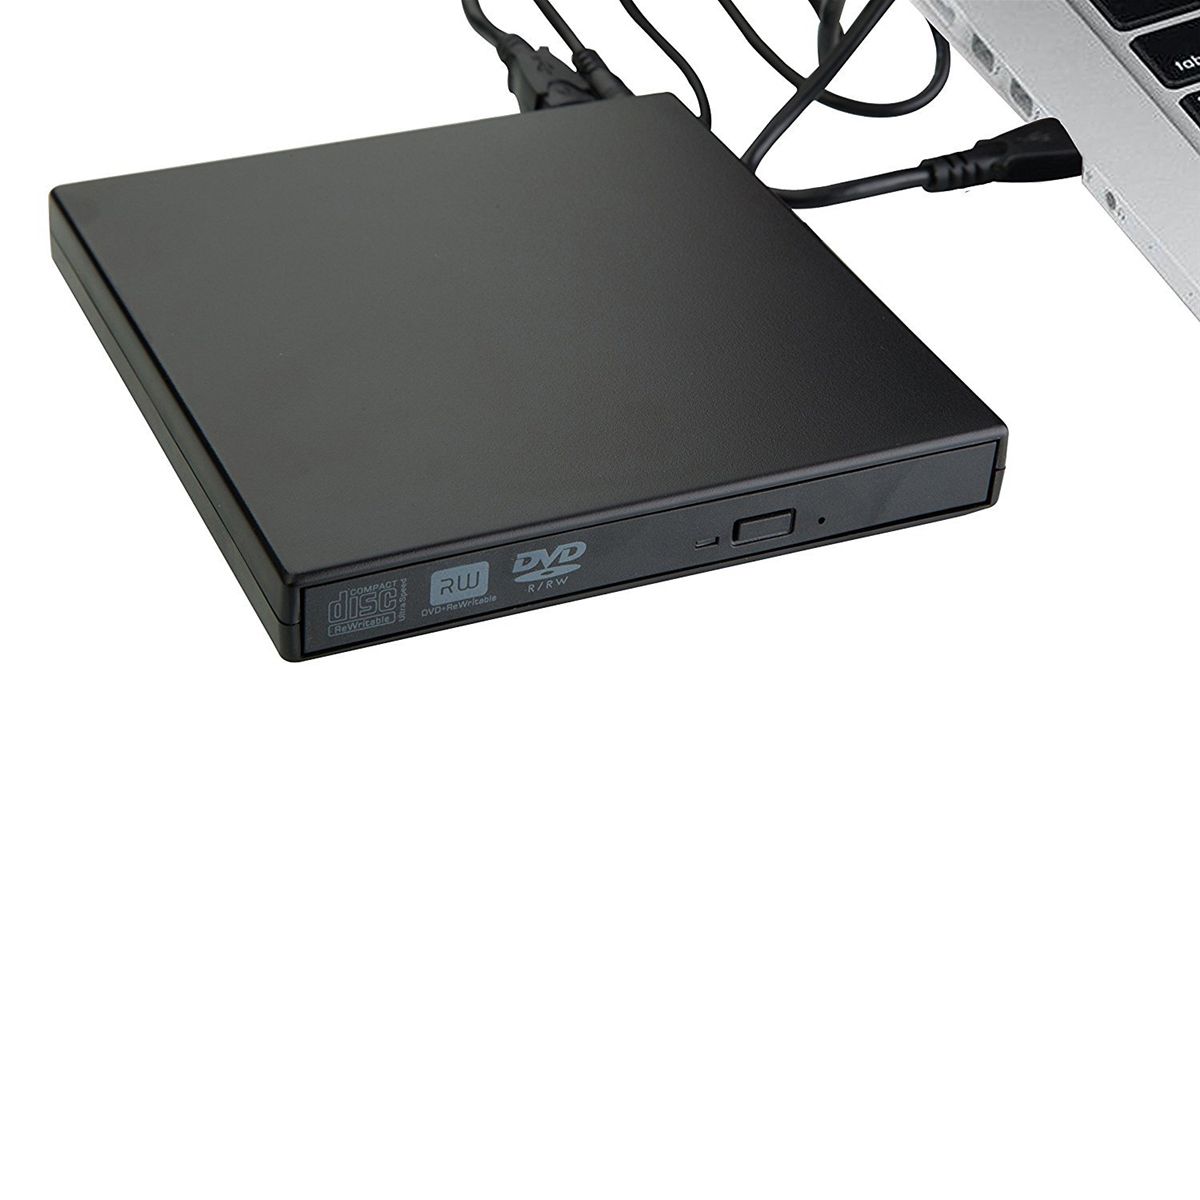 USB-30-External-Optical-Drive-DVD-RW-Player-CD-DVD-Burner-Writer-Rewriter-Data-Transfer-for-PC-Lapto-1753070